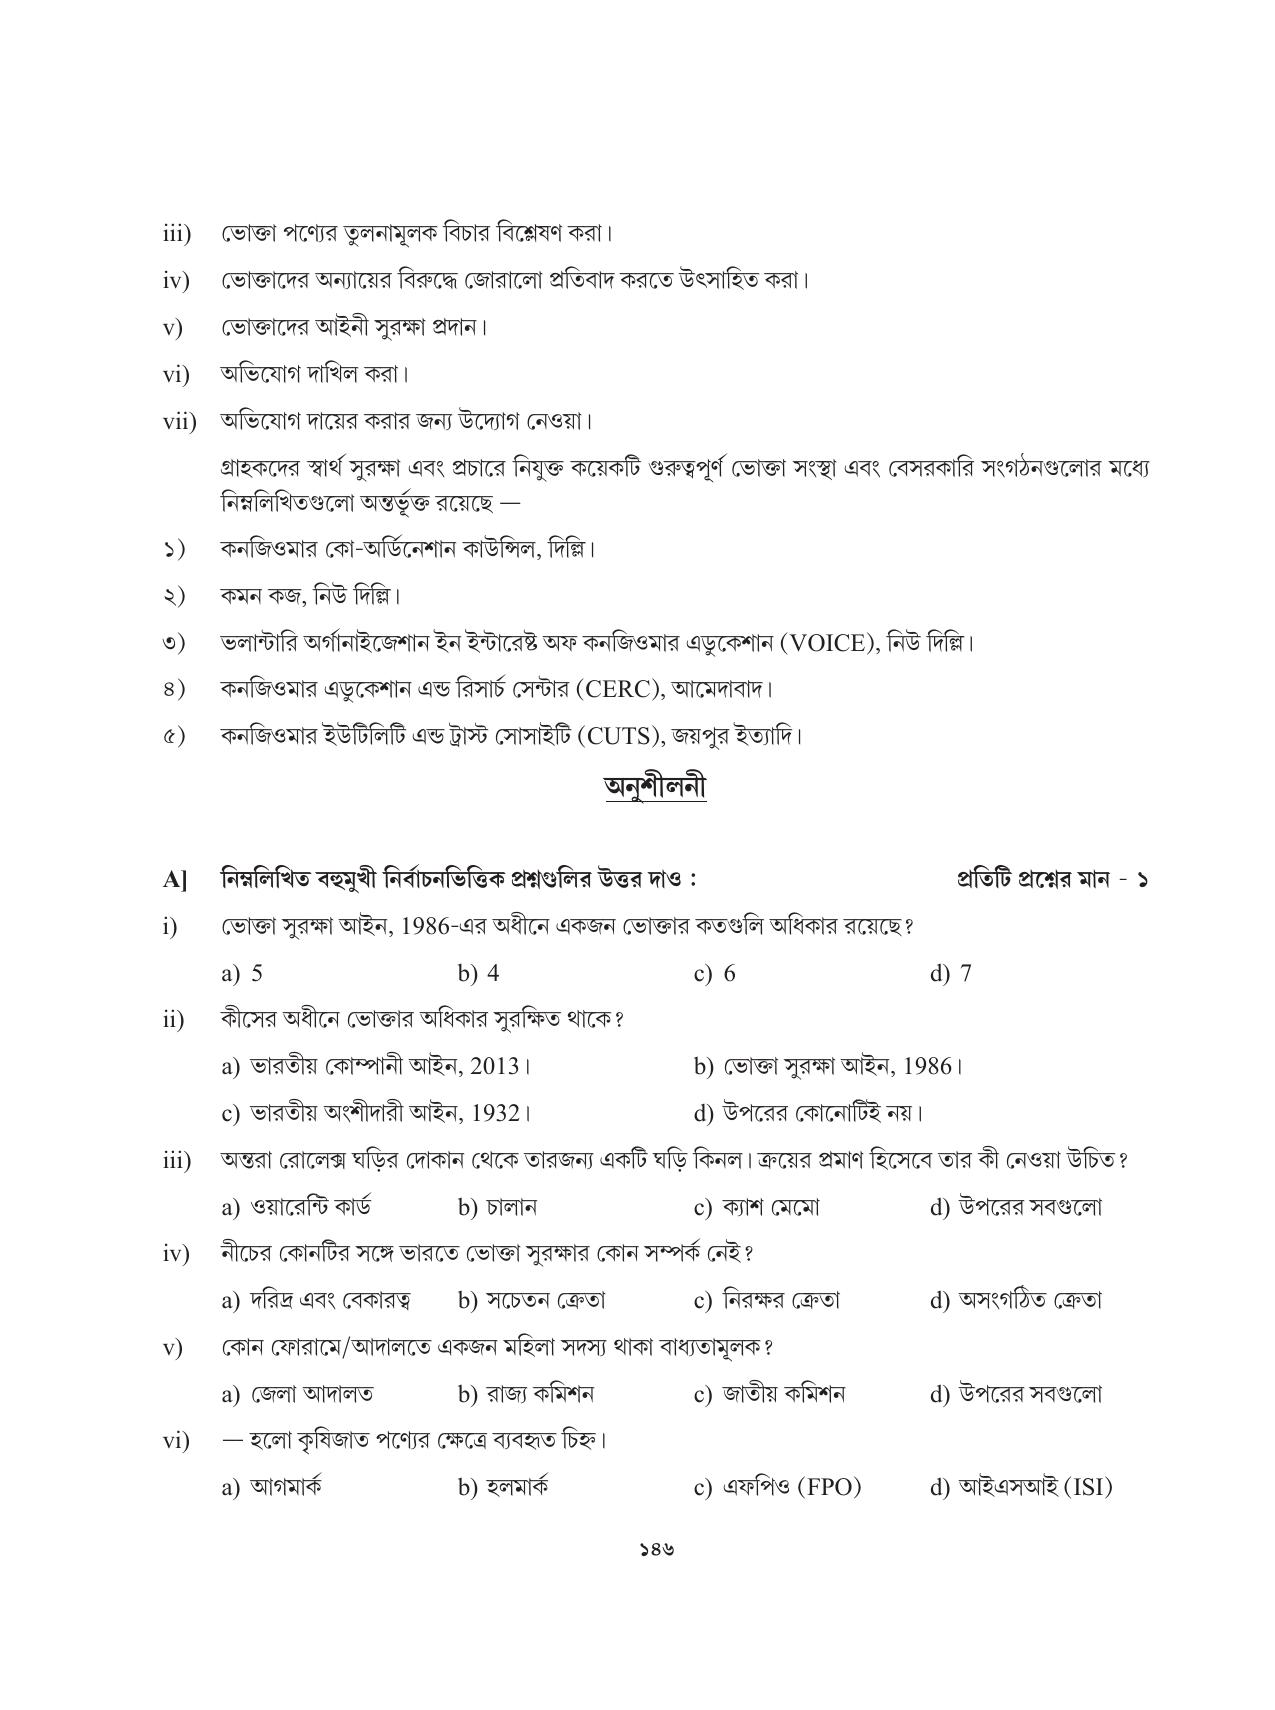 Tripura Board Class 12 Karbari Shastra Bengali Version Workbooks - Page 146